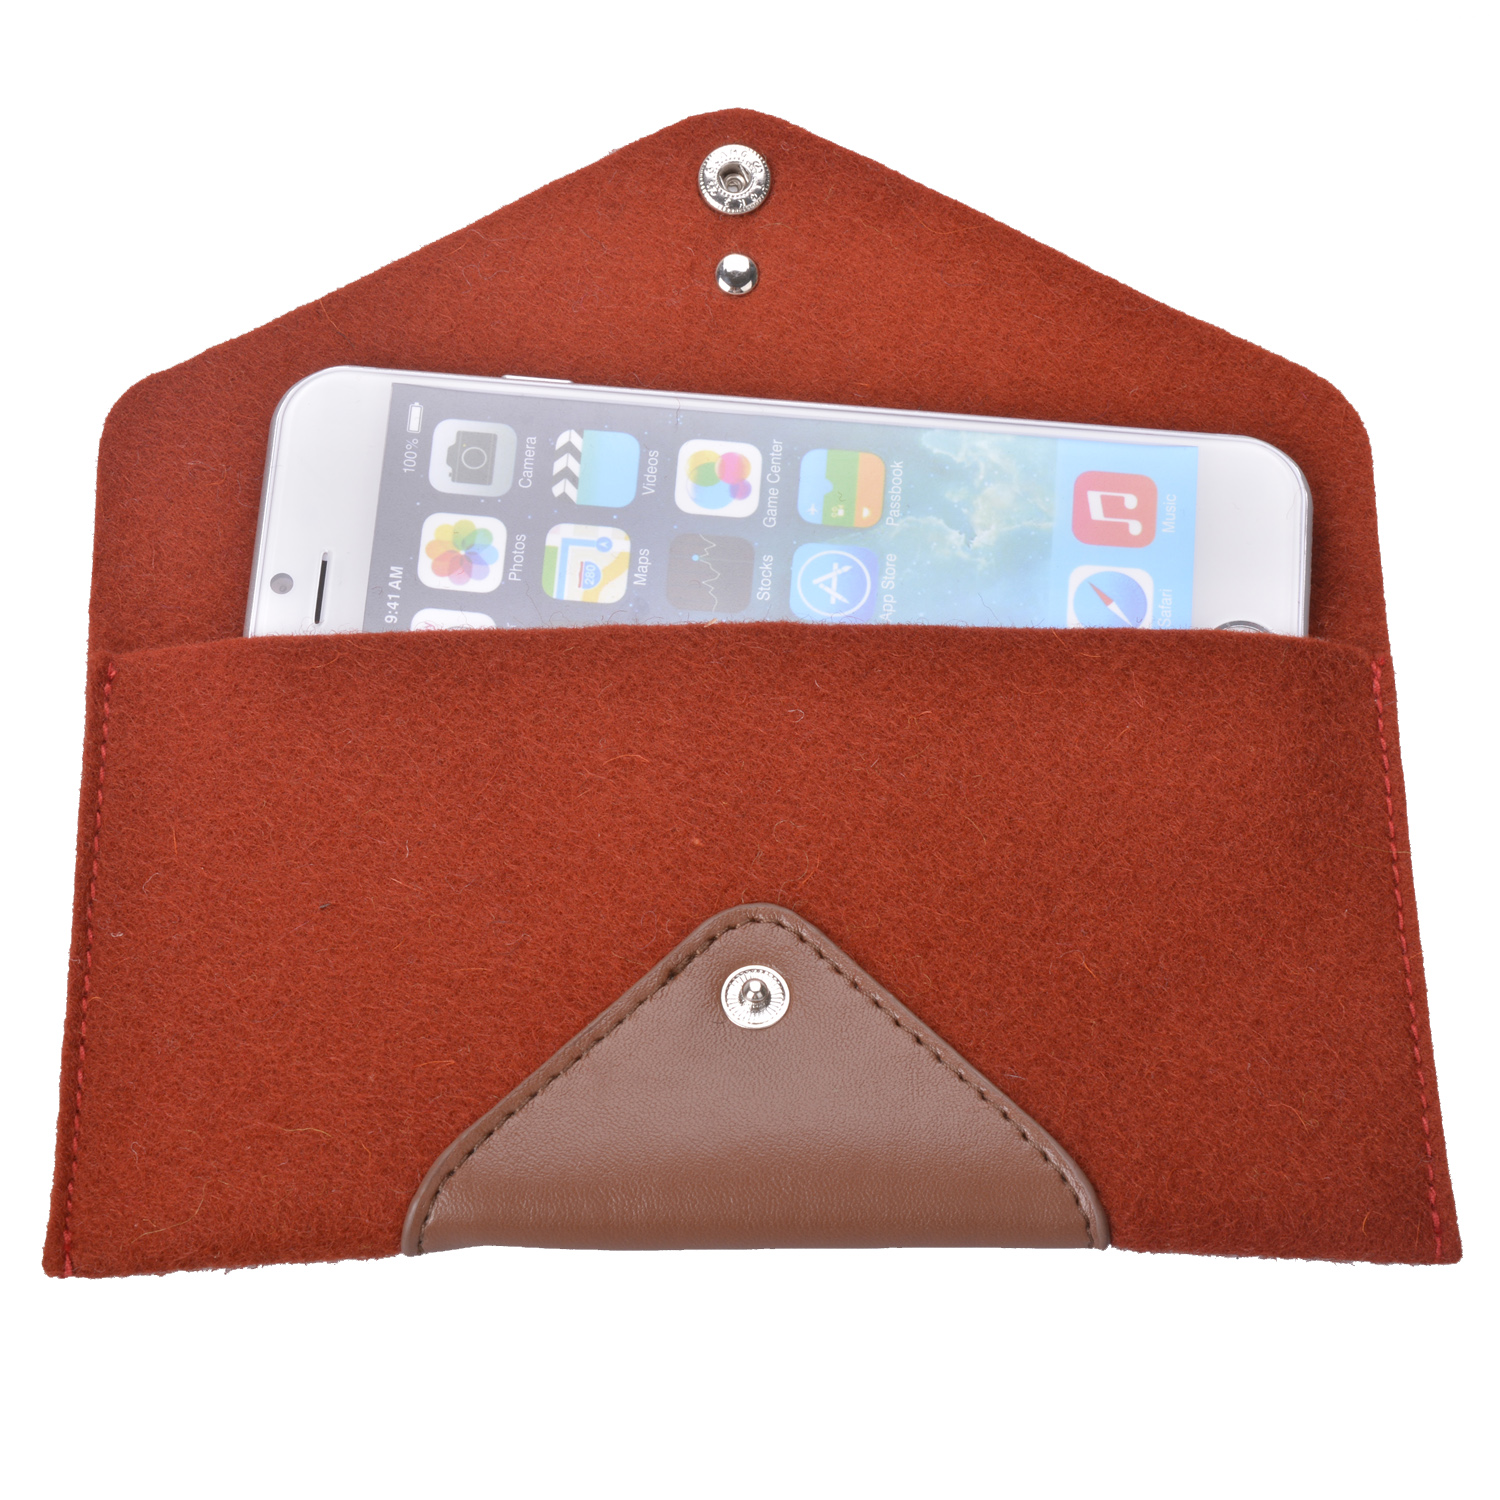 чехол для iPhone ЮВ/Винтаж мягкая бумажник чехол телефон сумка для iPhone ЮВ 4,7 дюйма